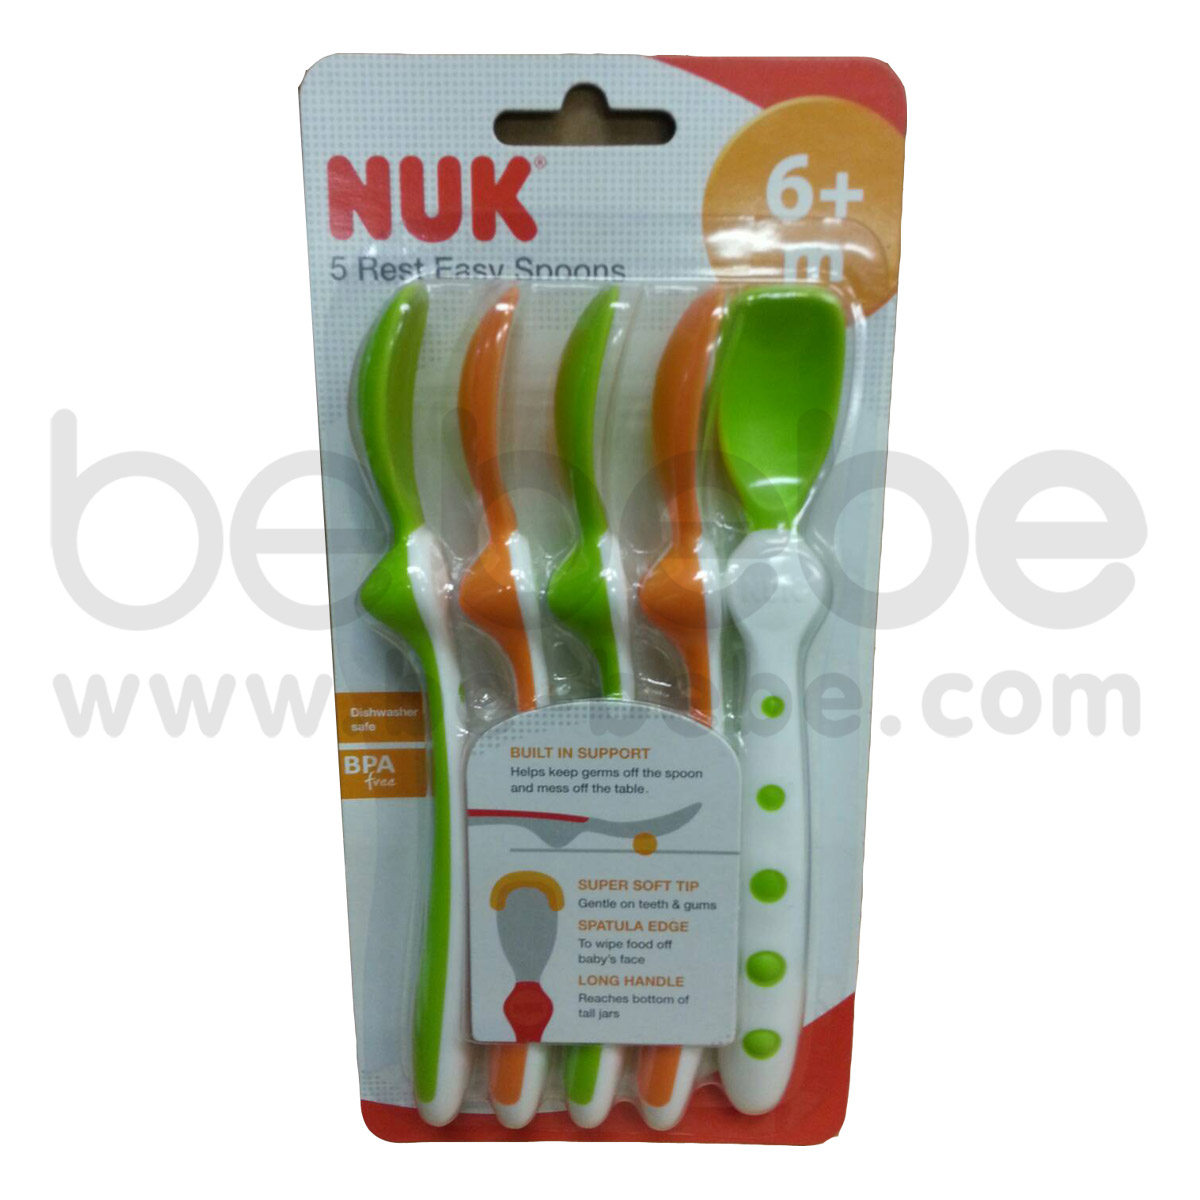 NUK:NUK 5 Rest Easy Spoons